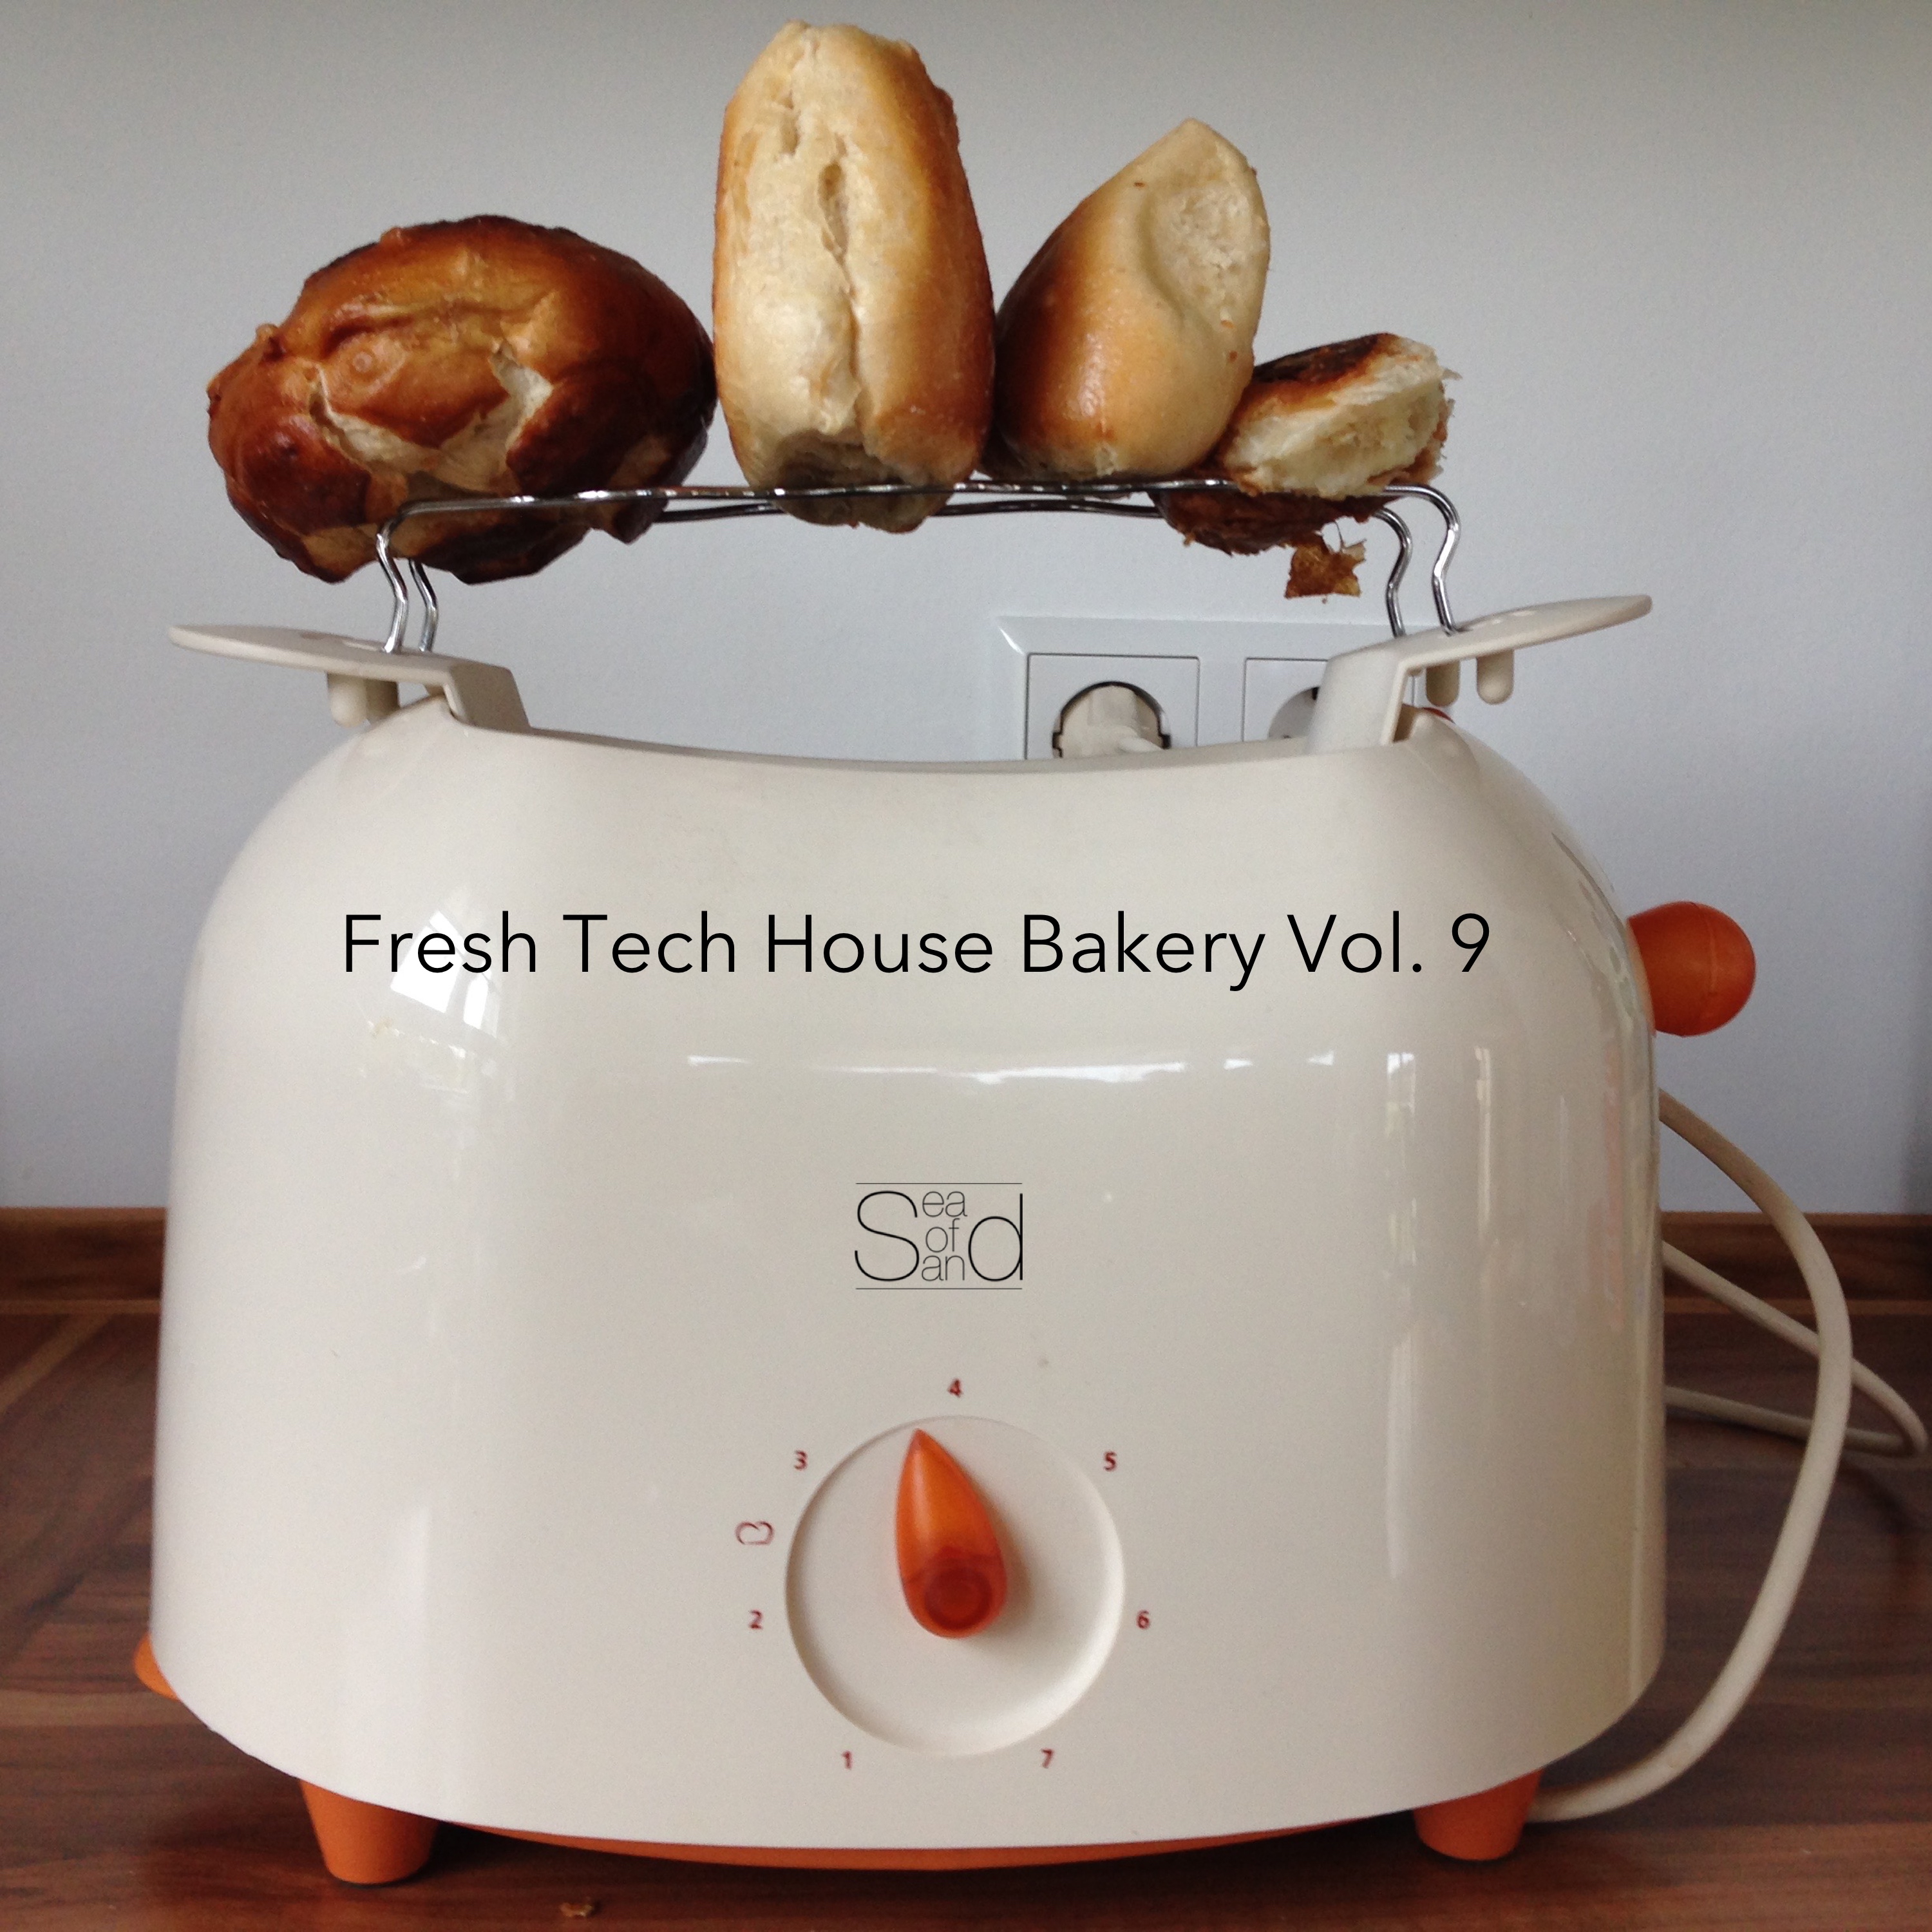 Fresh Tech House Bakery, Vol. 9